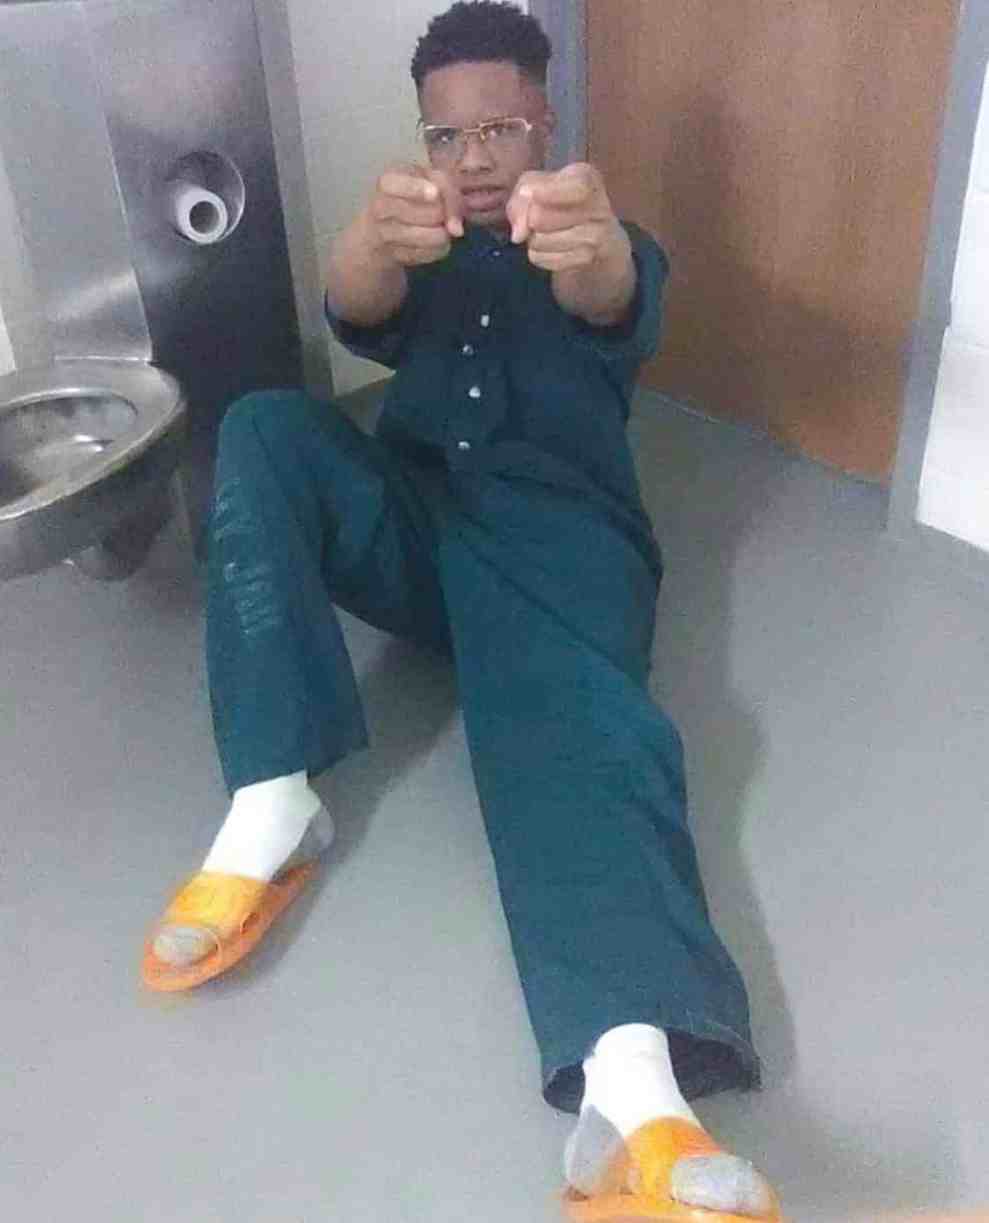 Tay-K wearing a green jumpsuit in jail